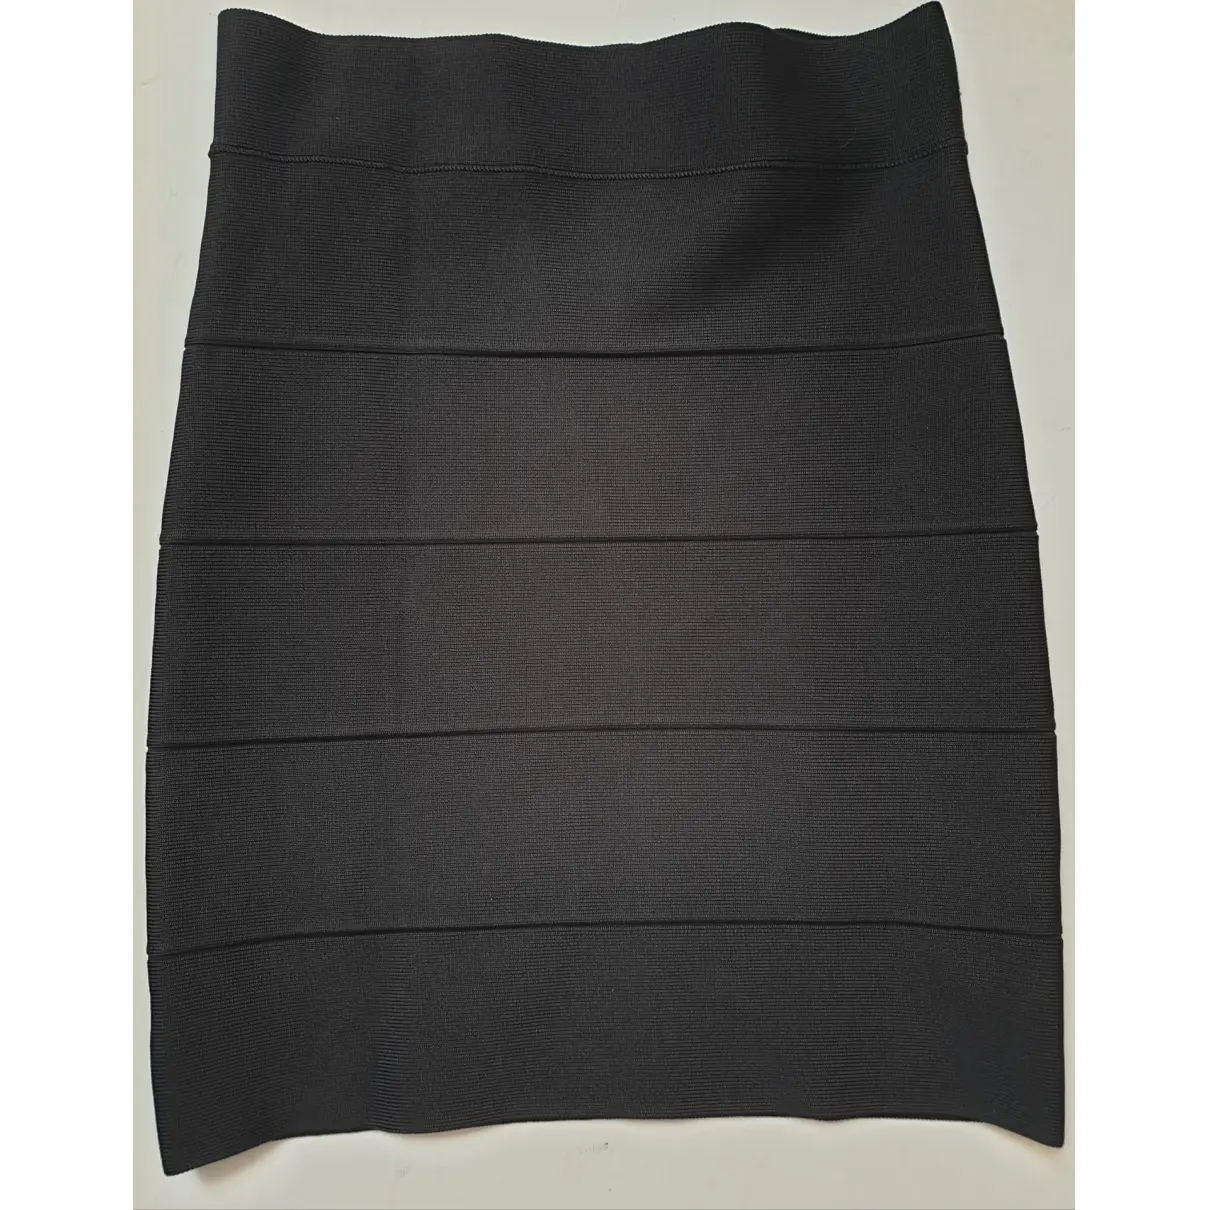 Buy Bcbg Max Azria Mini skirt online